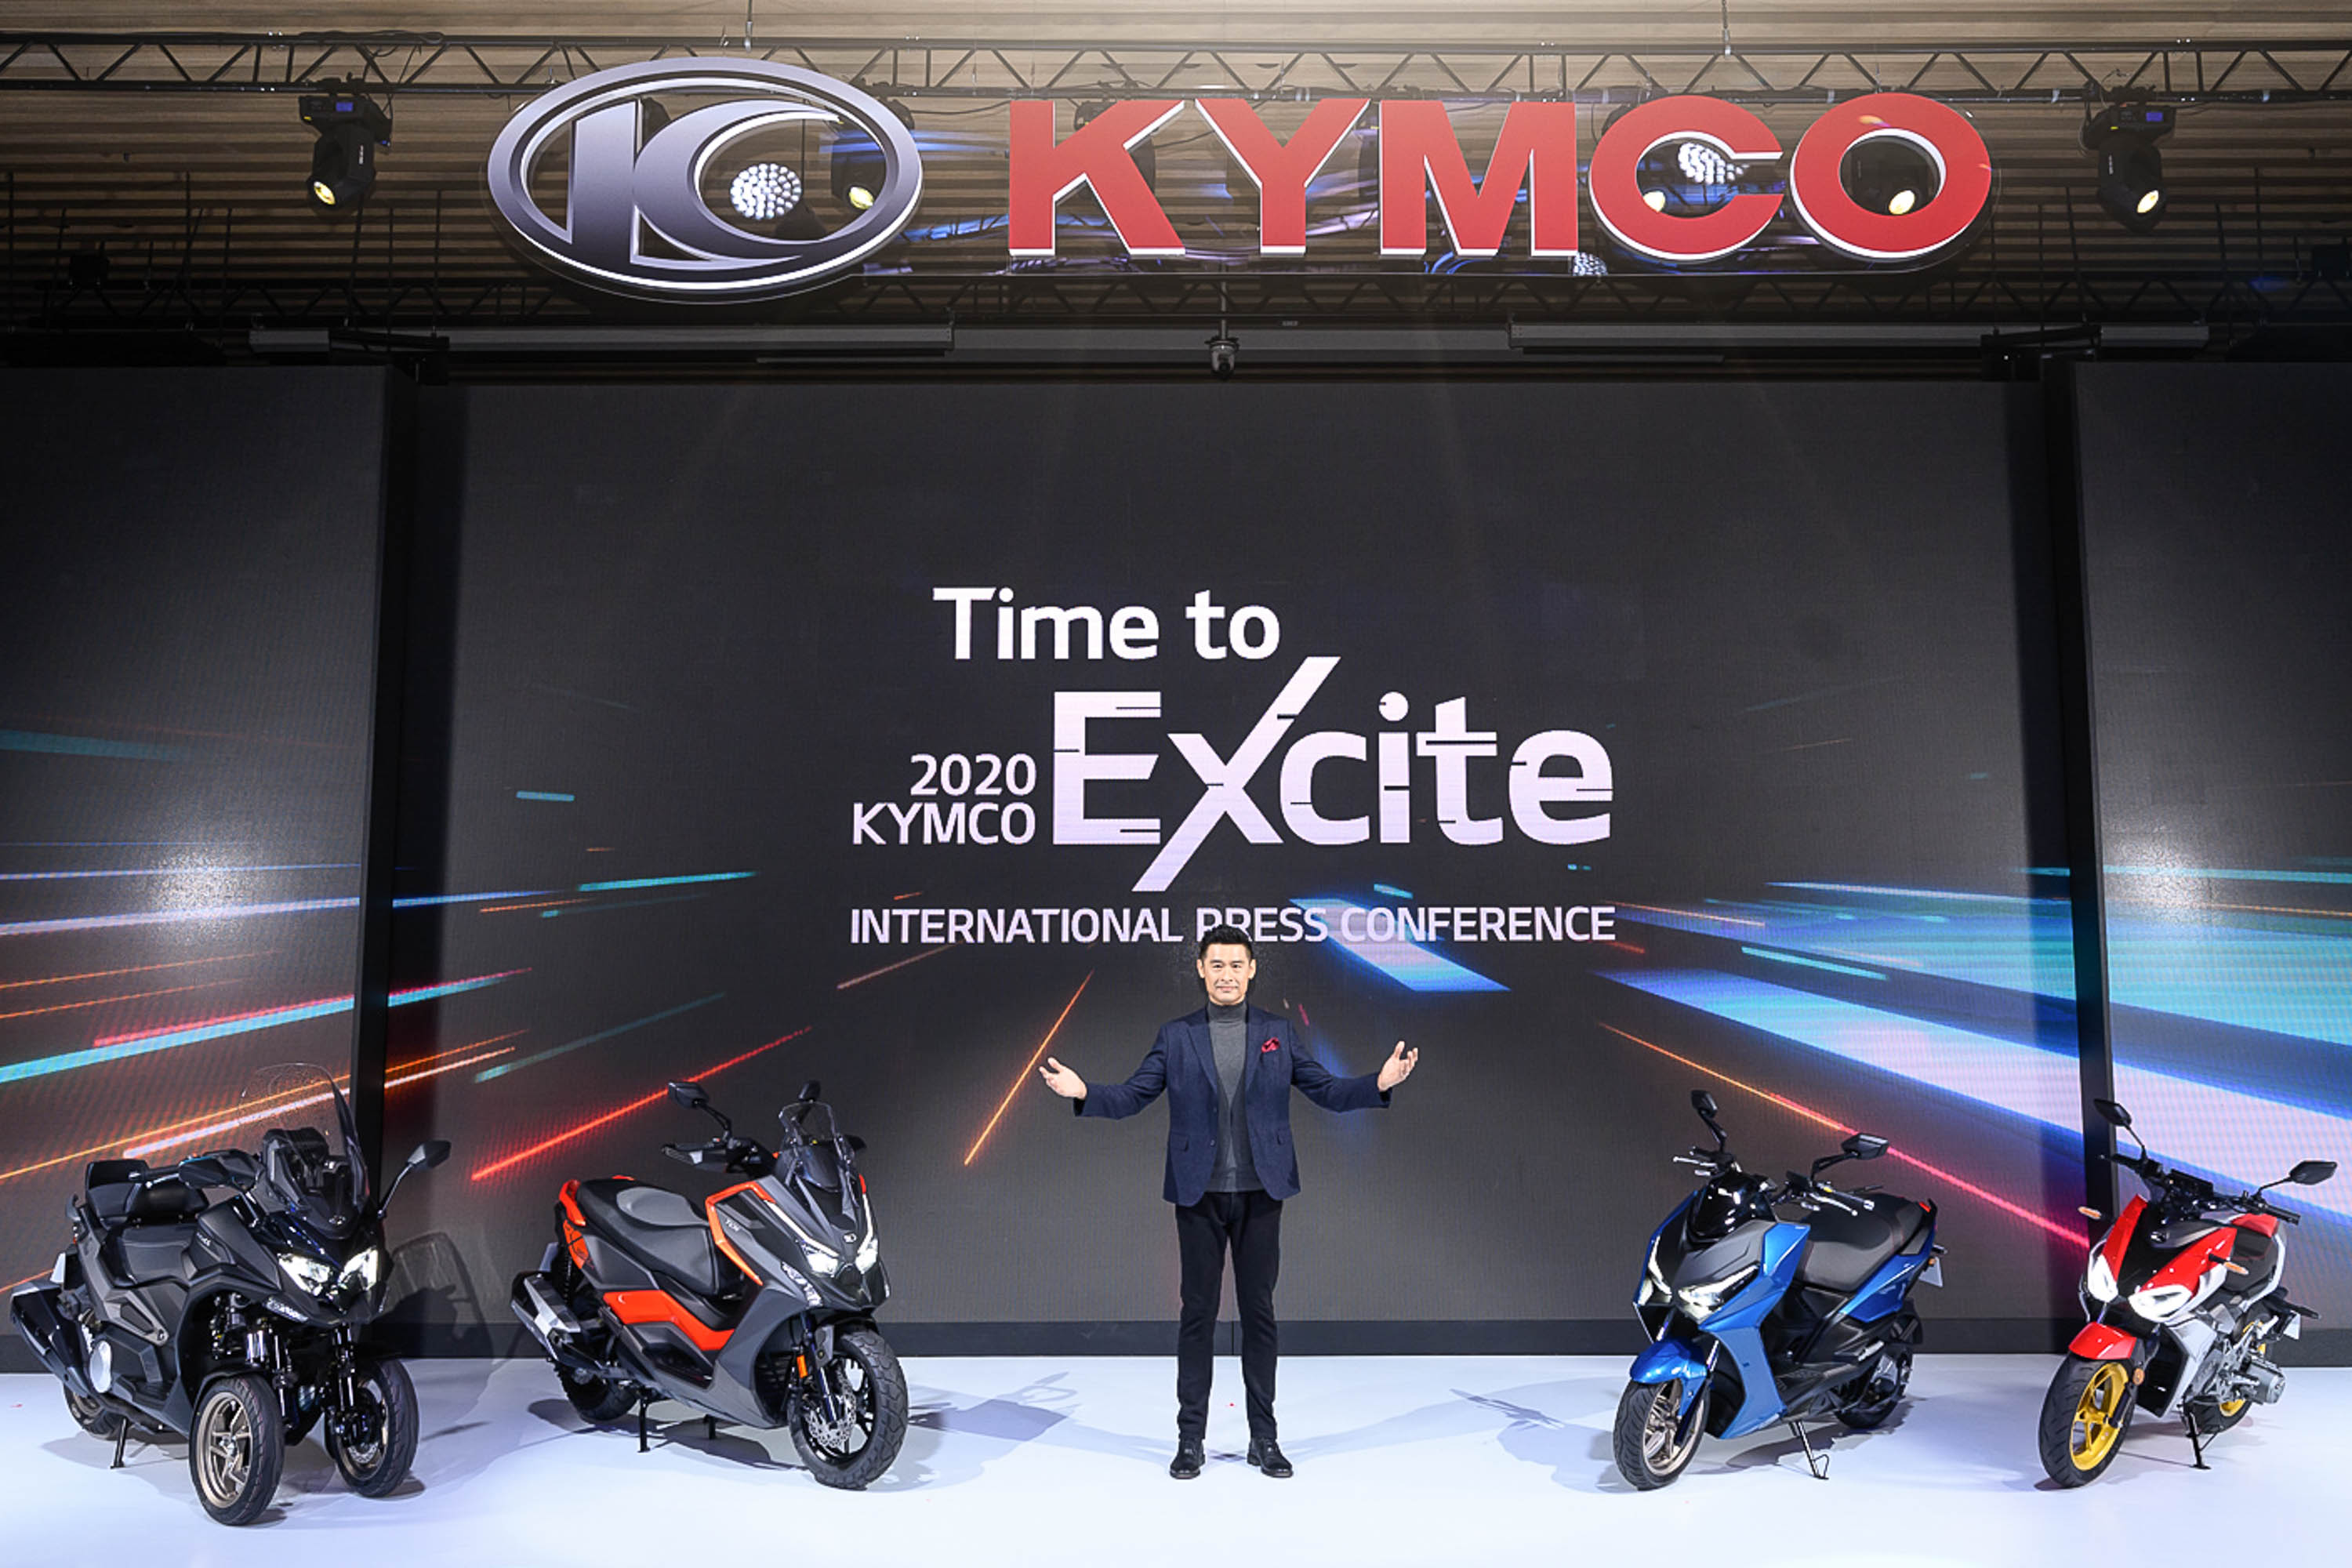 Kymco 日前舉辦的「Time to Excite 國際新車發表會」中哪些車款會正式在台上市？透過與 Kymco 柯勝峯董事長面對面的採訪，將提供最新訊息。